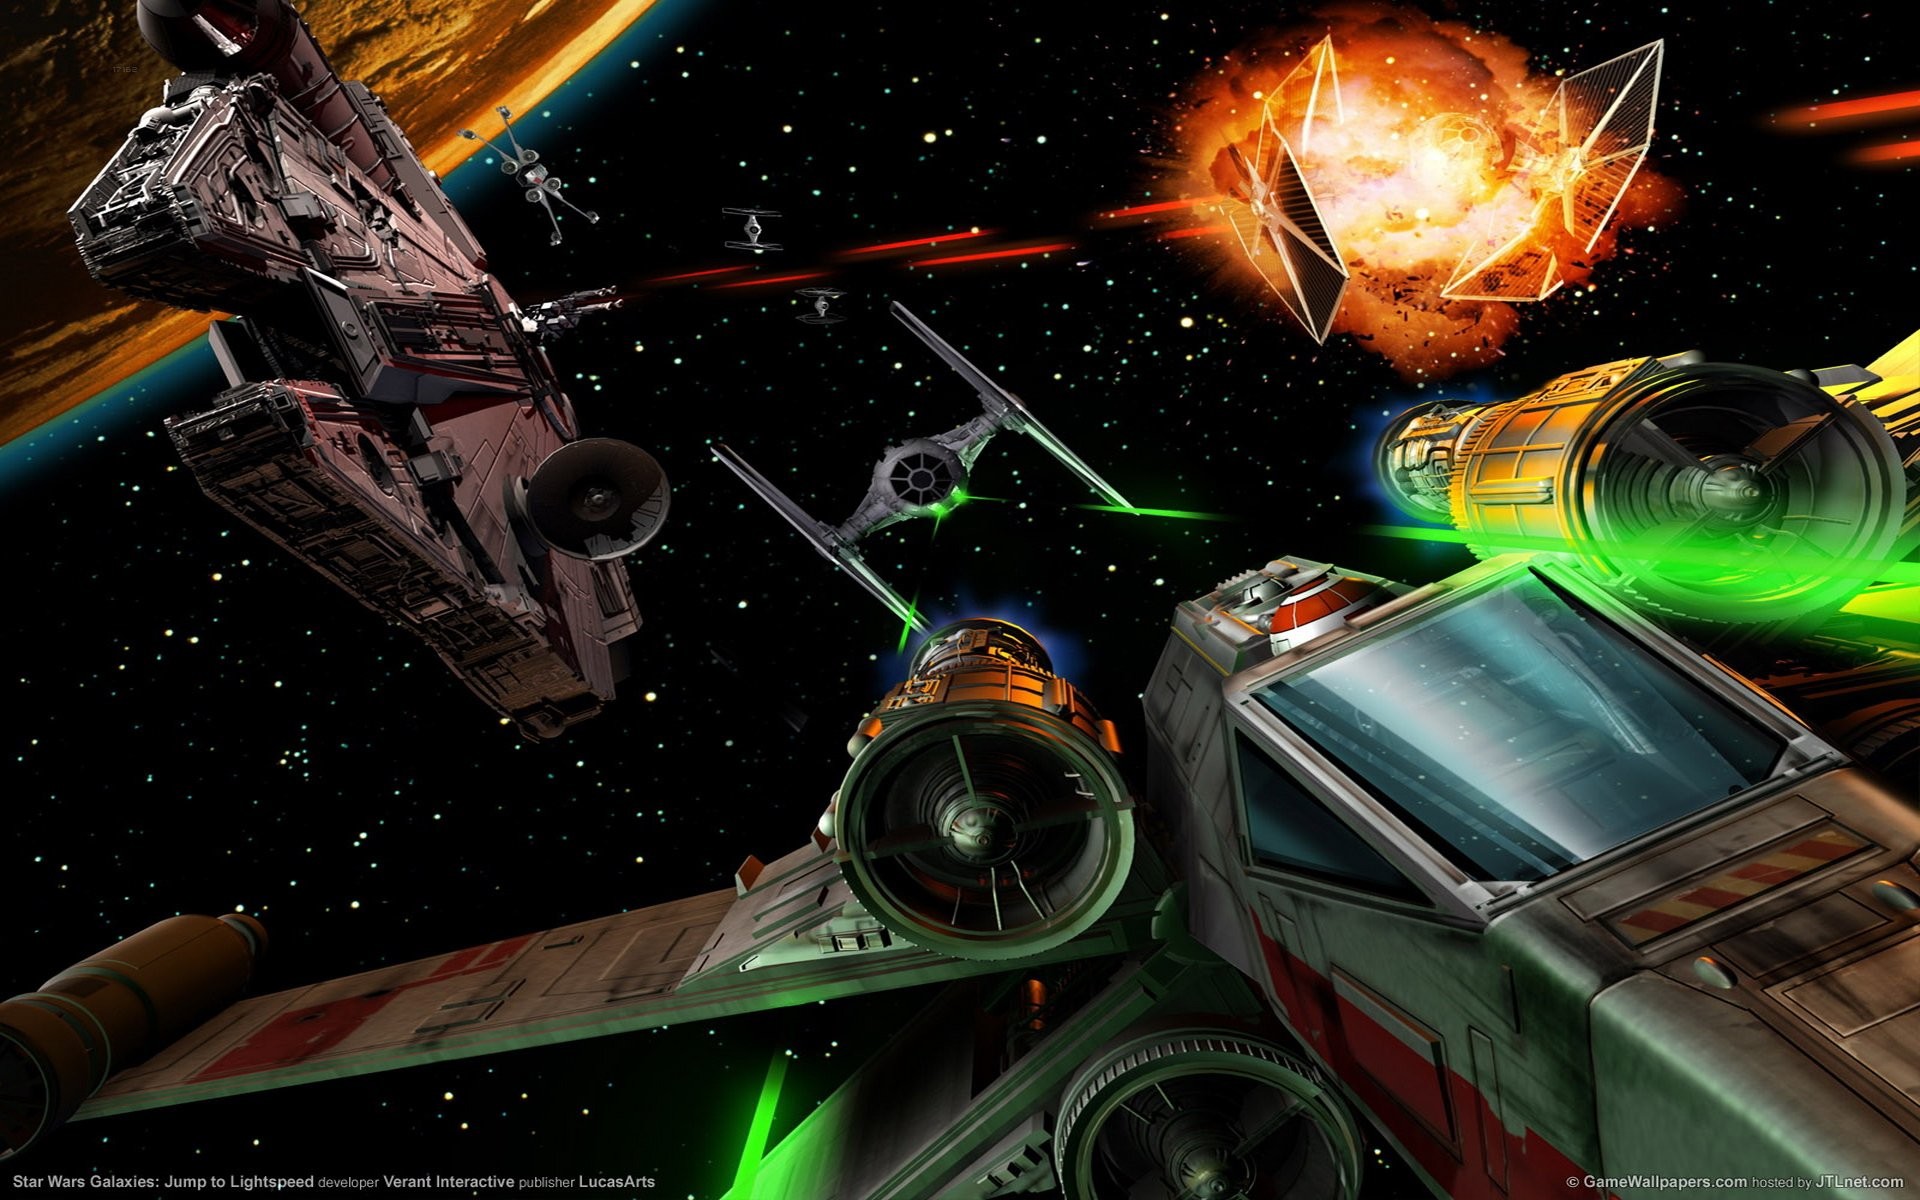 Star Wars Space Wallpaper Image